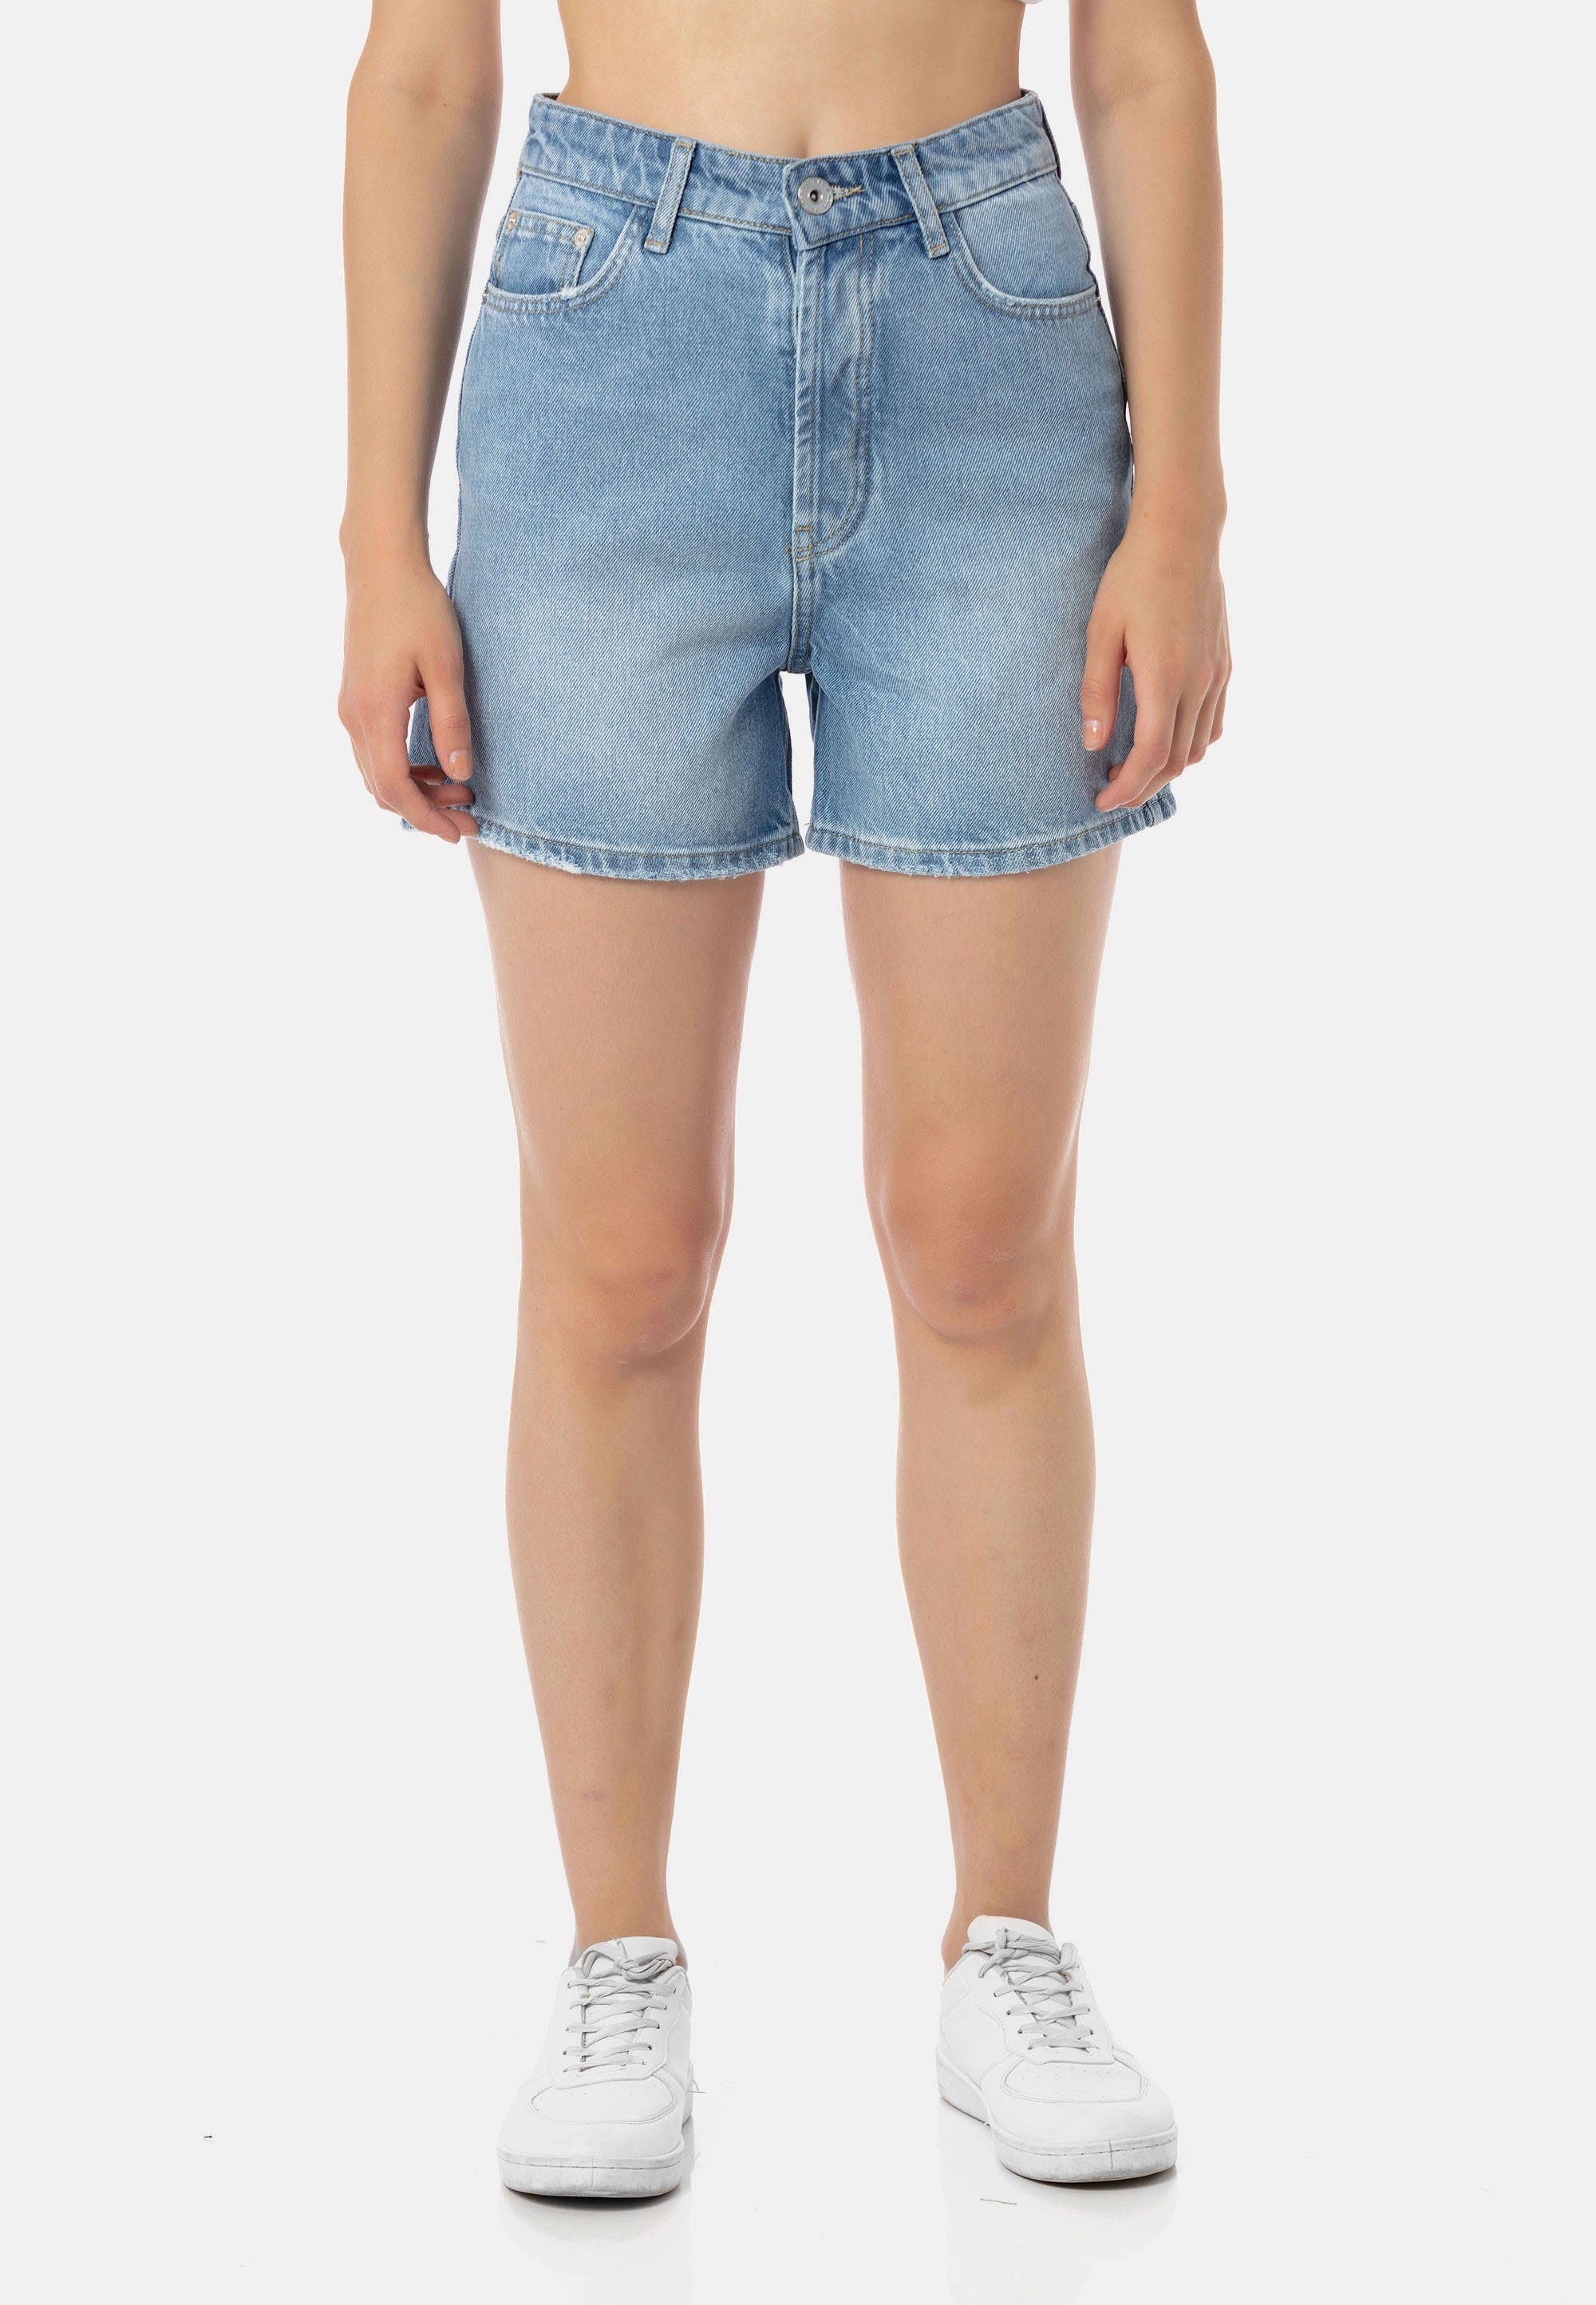 5-Pocket-Style klassischem Willenhall RedBridge hellblau mit Shorts